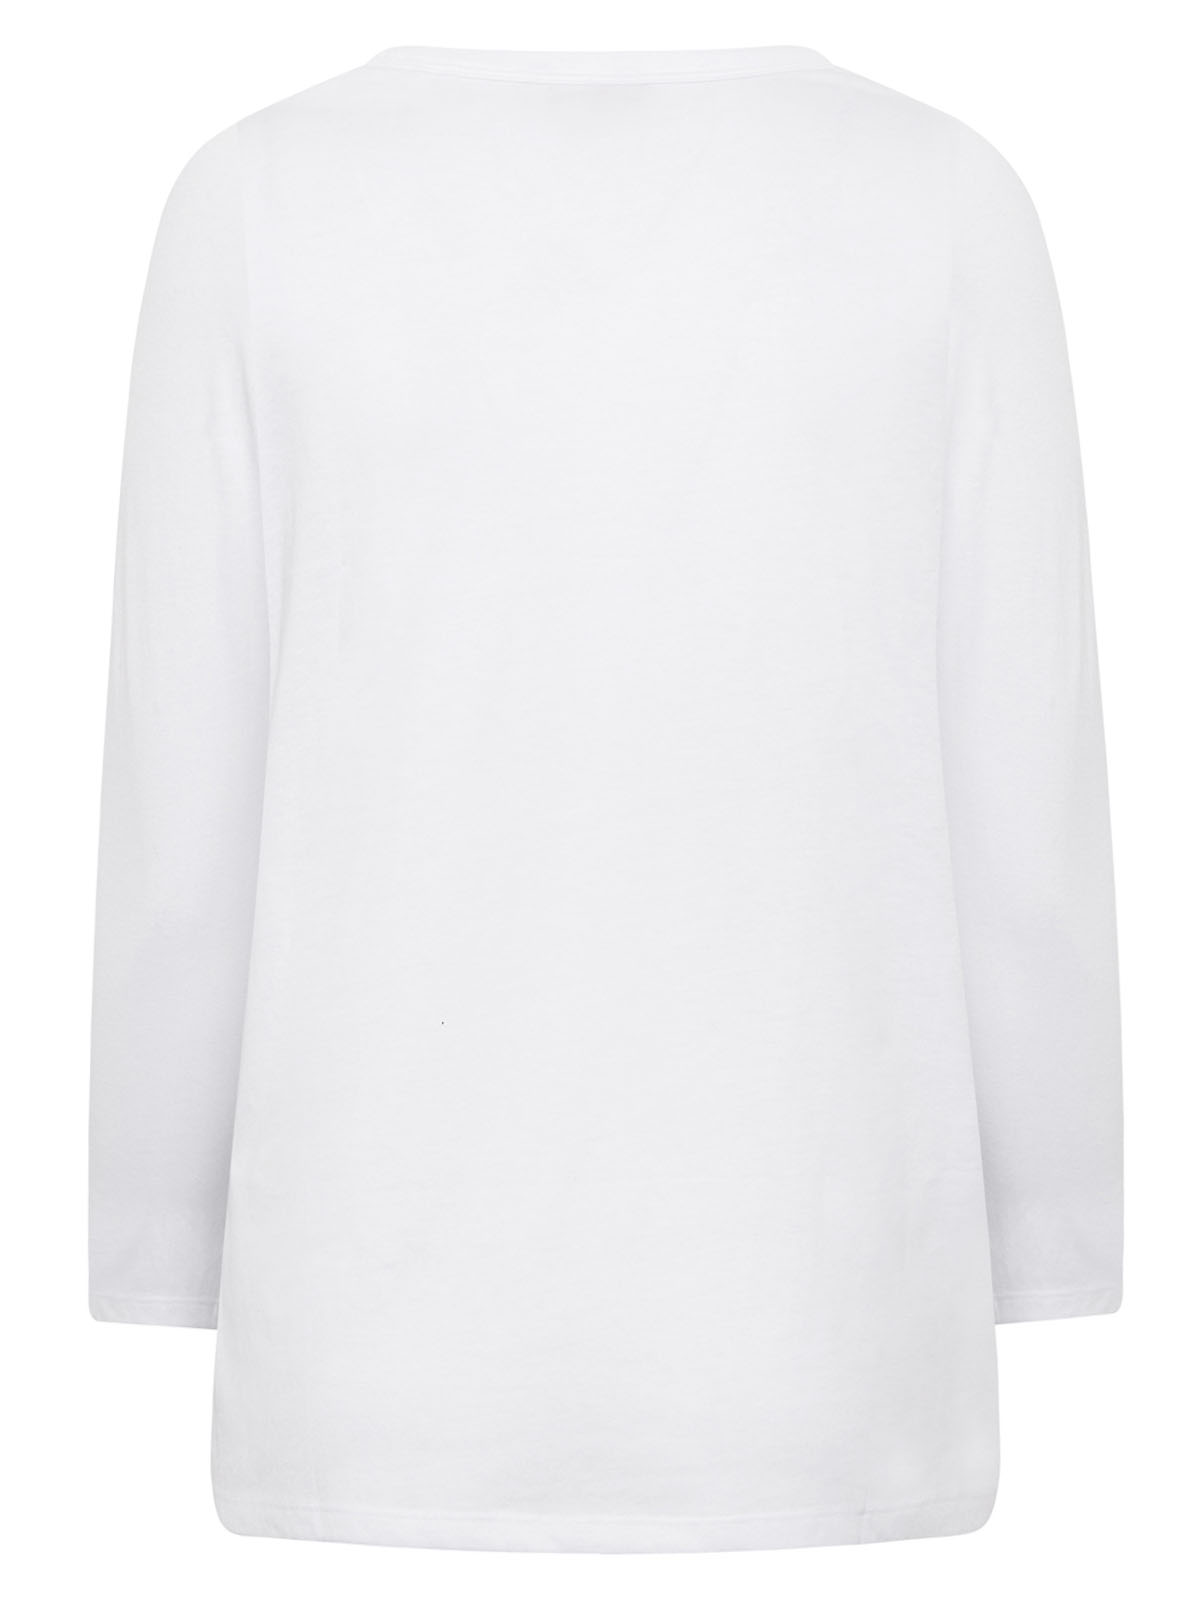 CURVE - - WHITE Cotton Rich Long Sleeve T-Shirt - Plus Size 14 to 38/40